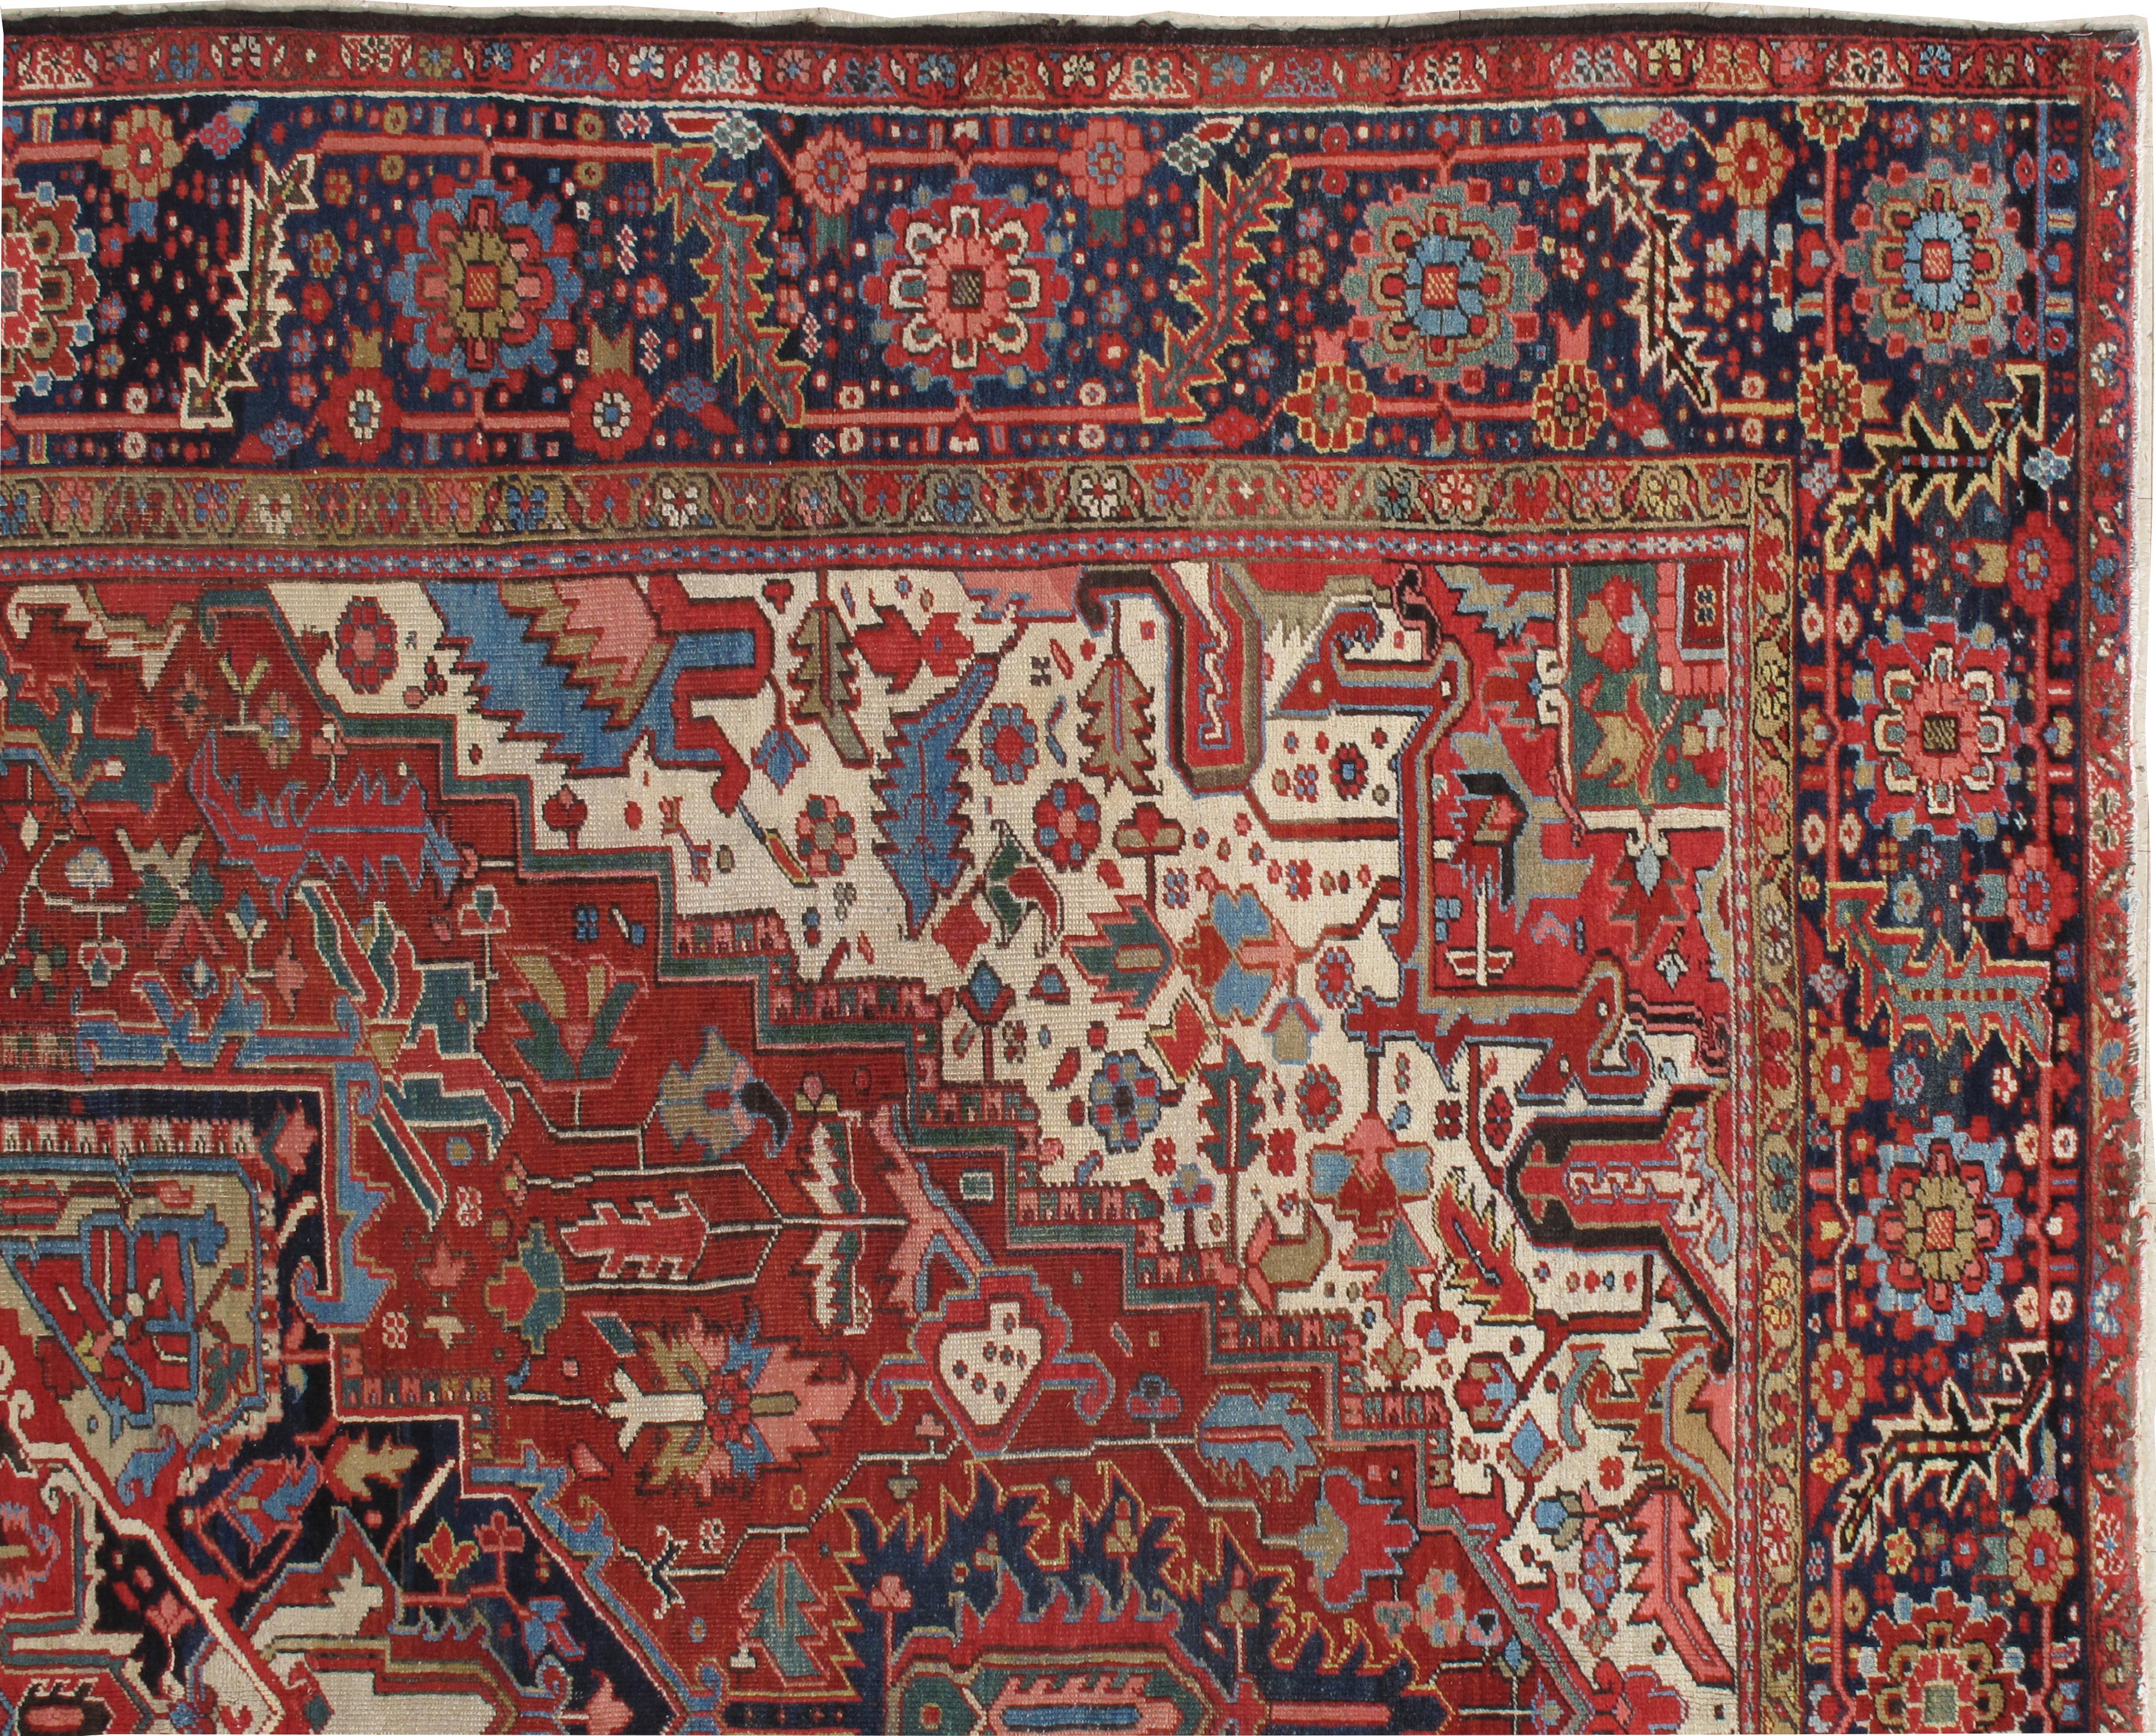 20th Century Antique Persian Heriz Carpet, Handmade Wool Oriental Rug, Rust, Navy, Lt Blue For Sale